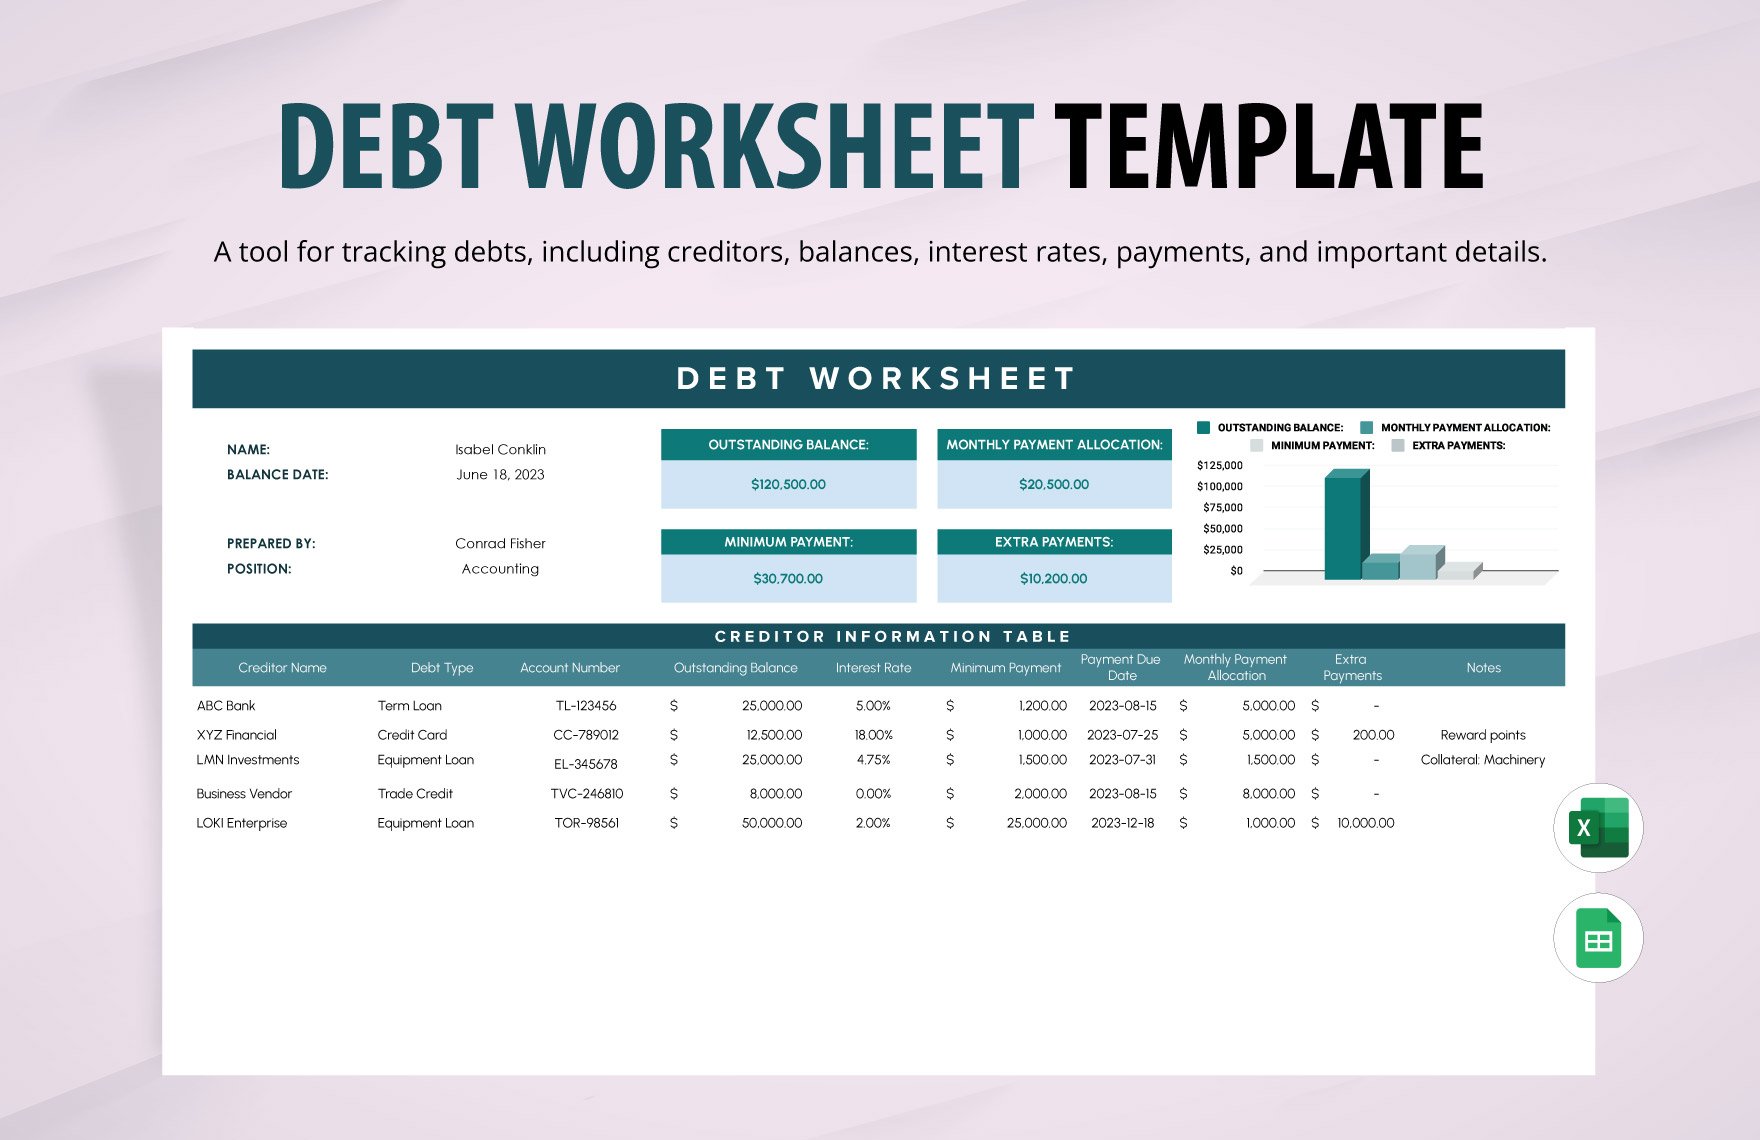 Debt Worksheet Template in Excel, Google Sheets